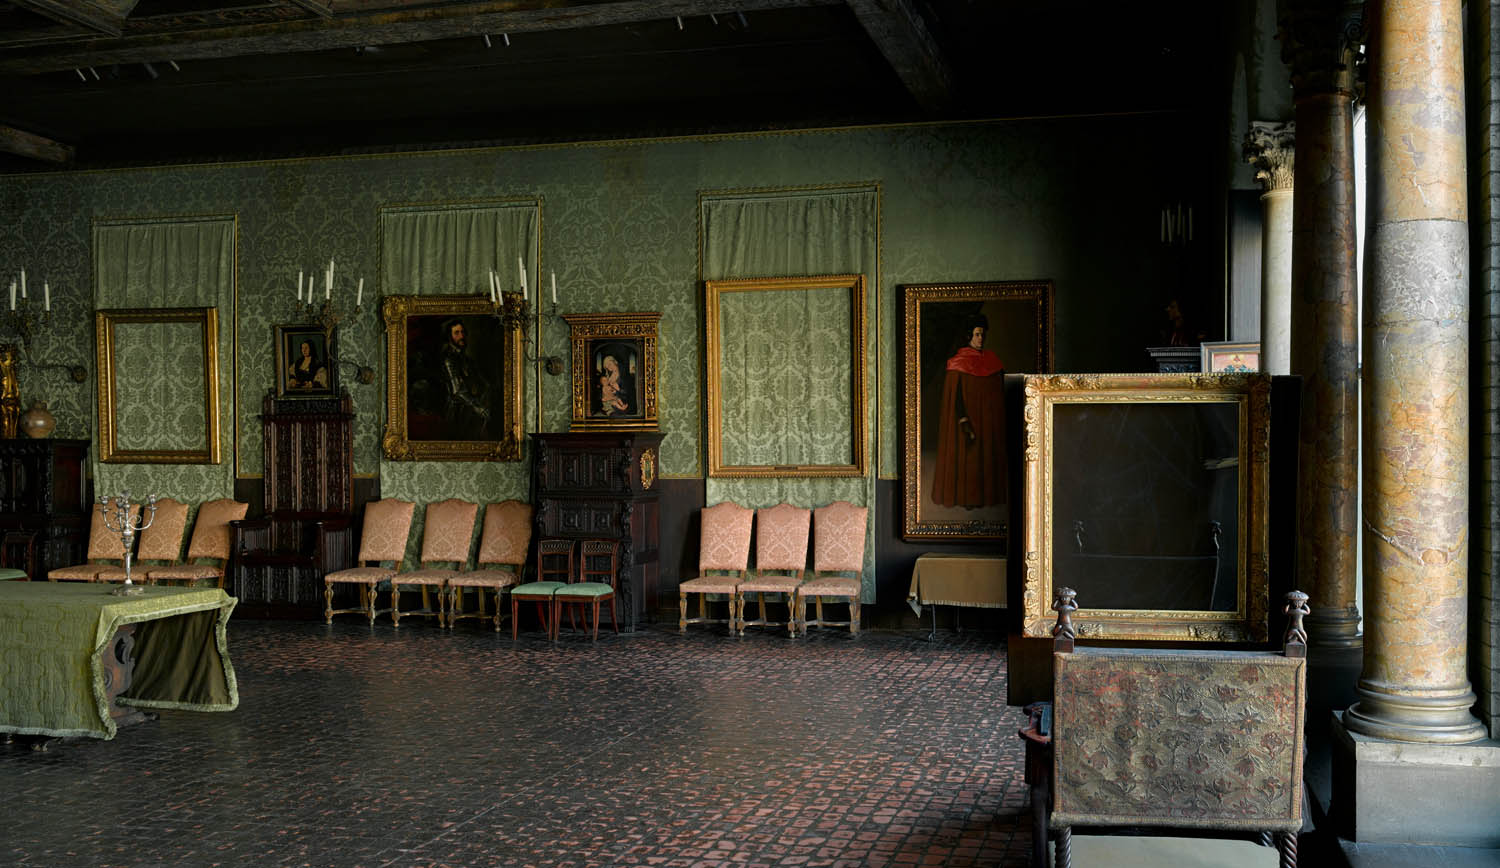 The Dutch Room at the Isabella Stewart Gardner Museum in Boston. (Courtesy Sean Dungan)